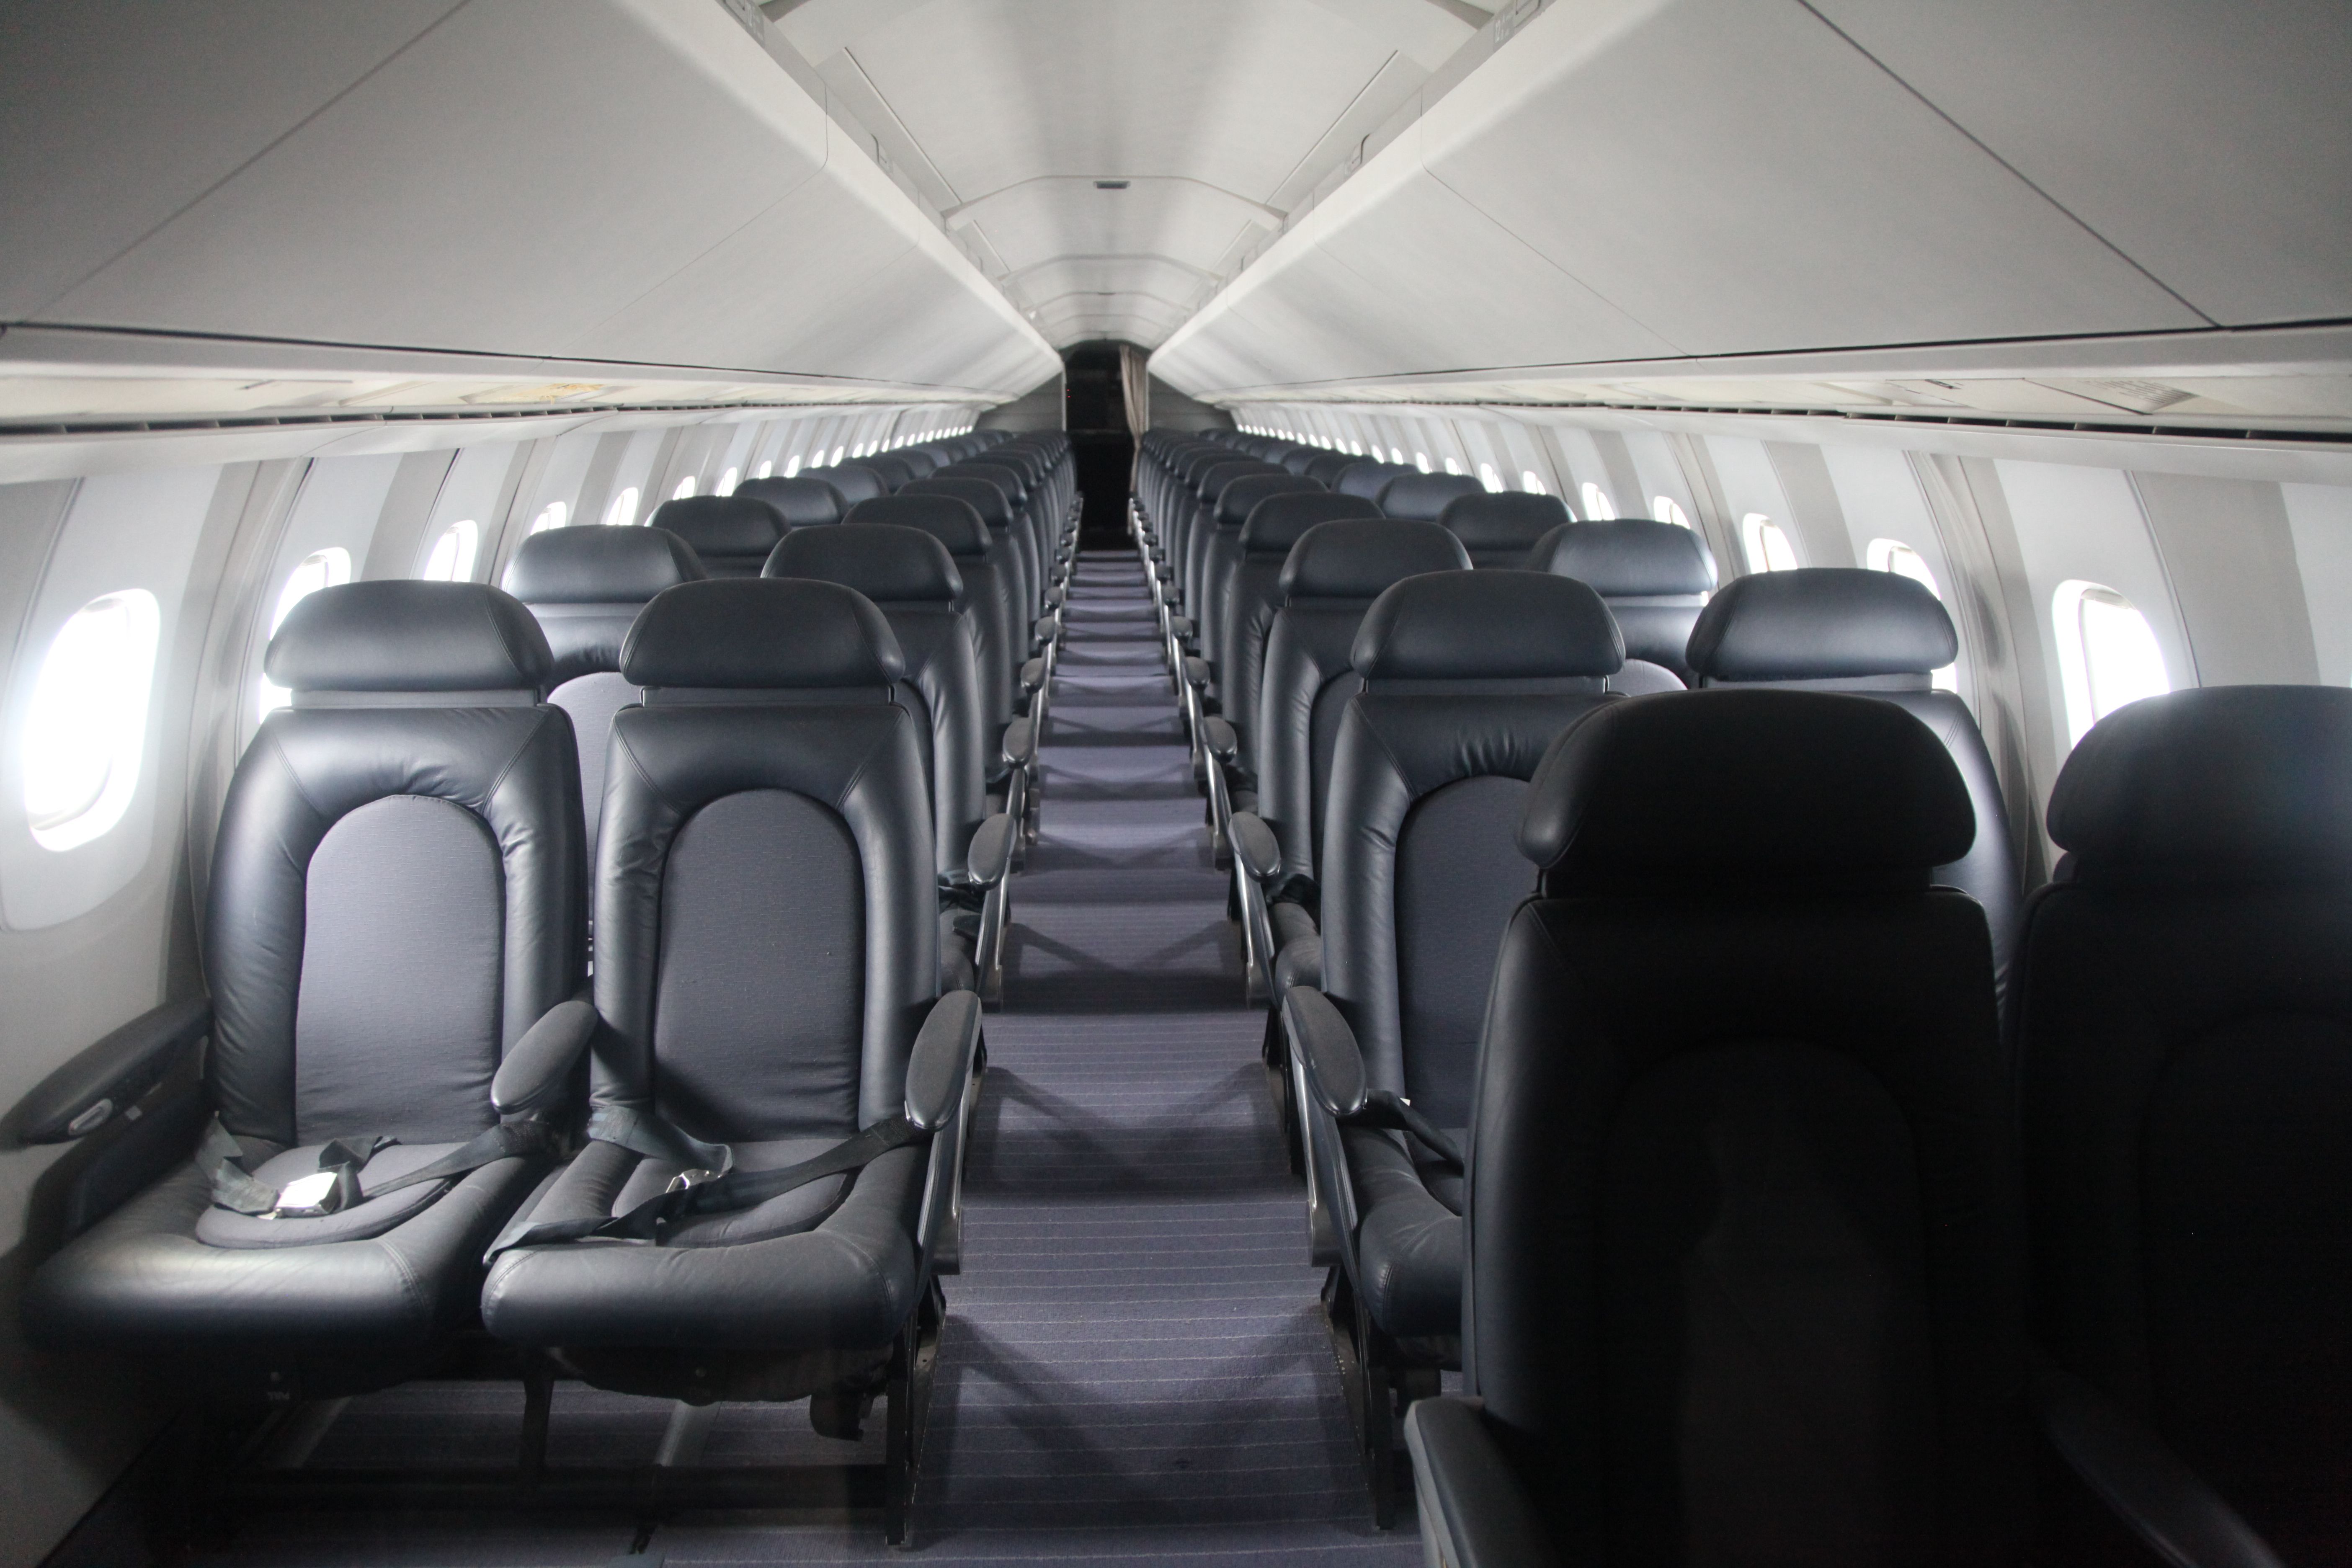 Concorde passenger cabin